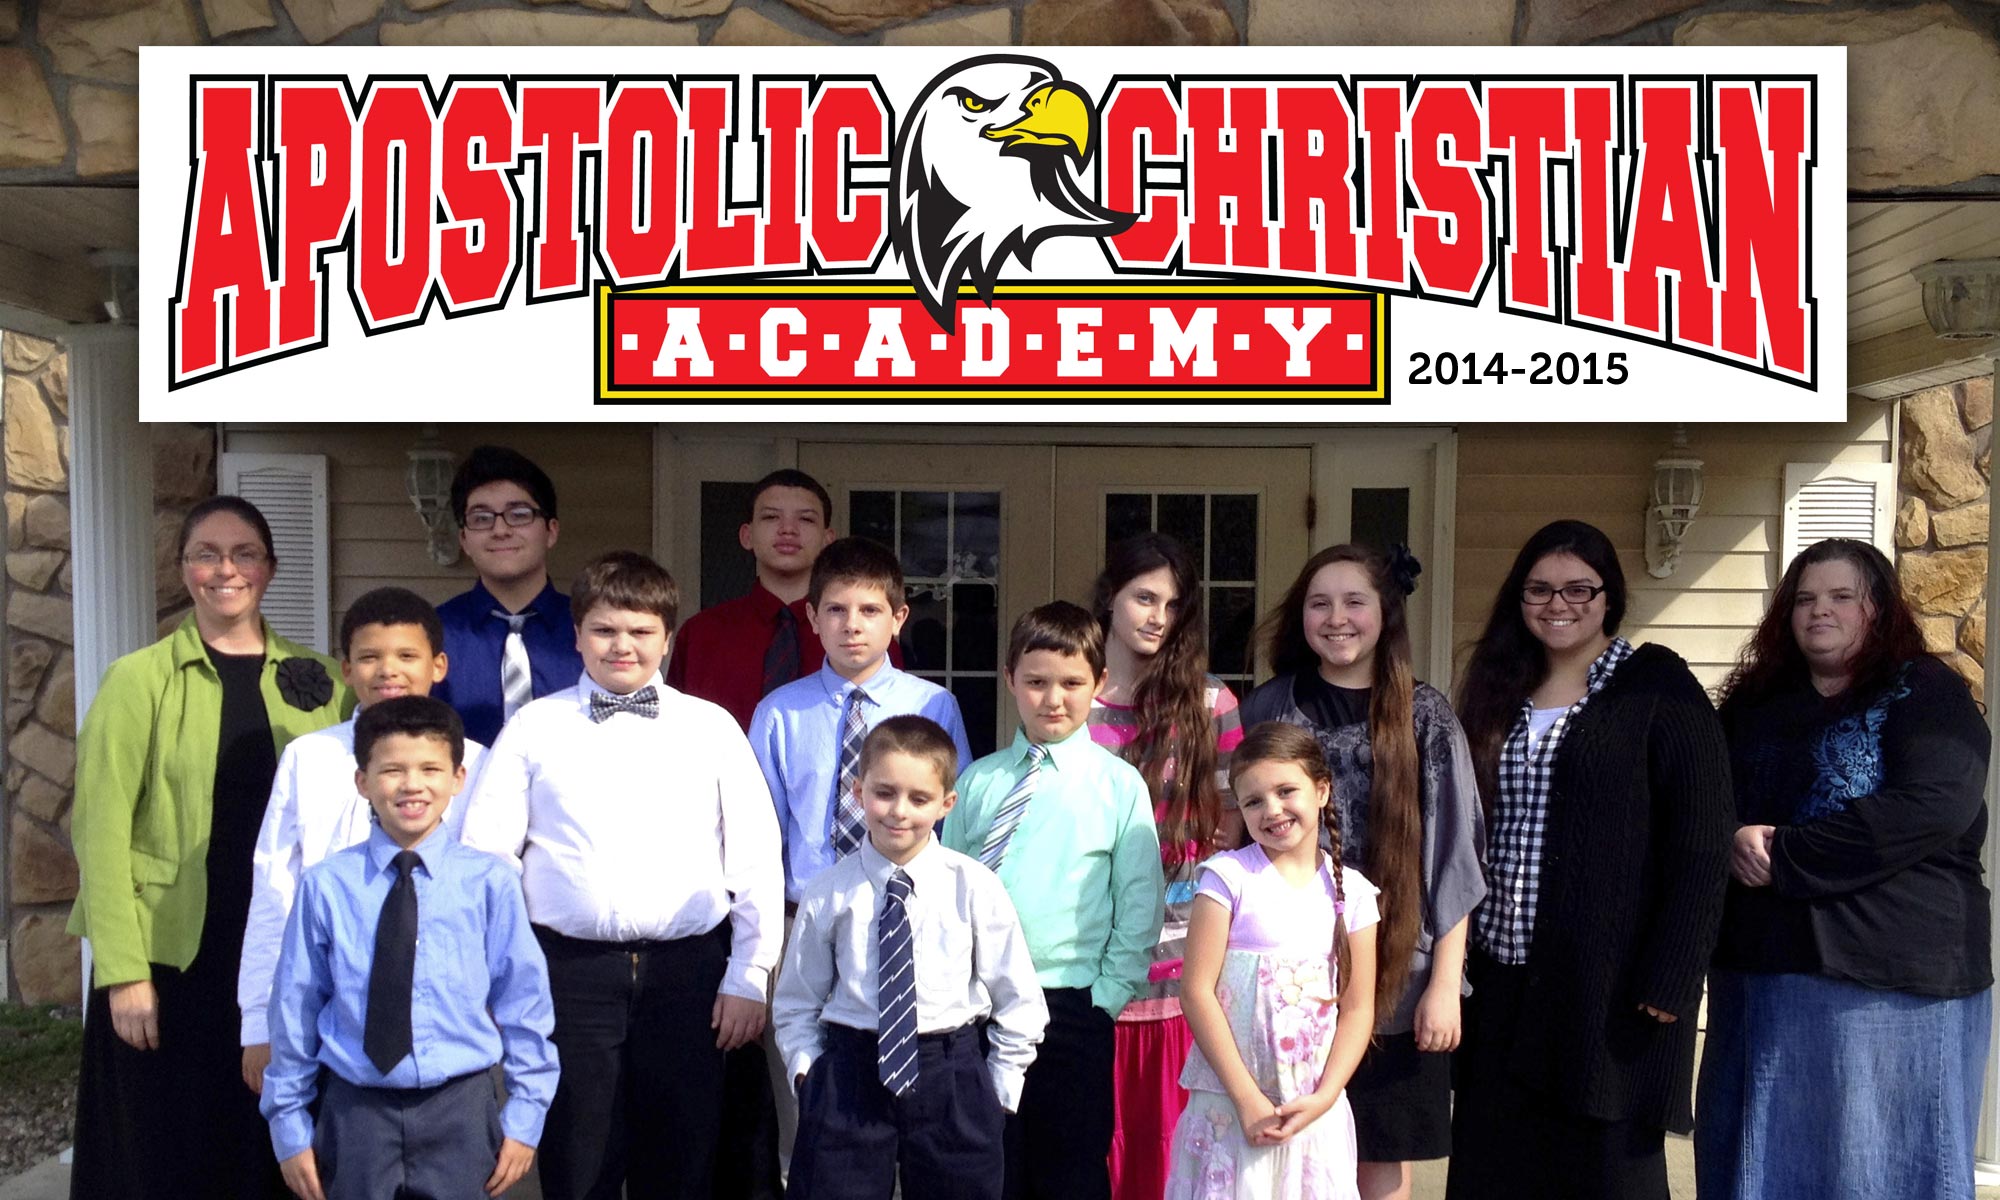 Apostolic Christian Academy (K-12)